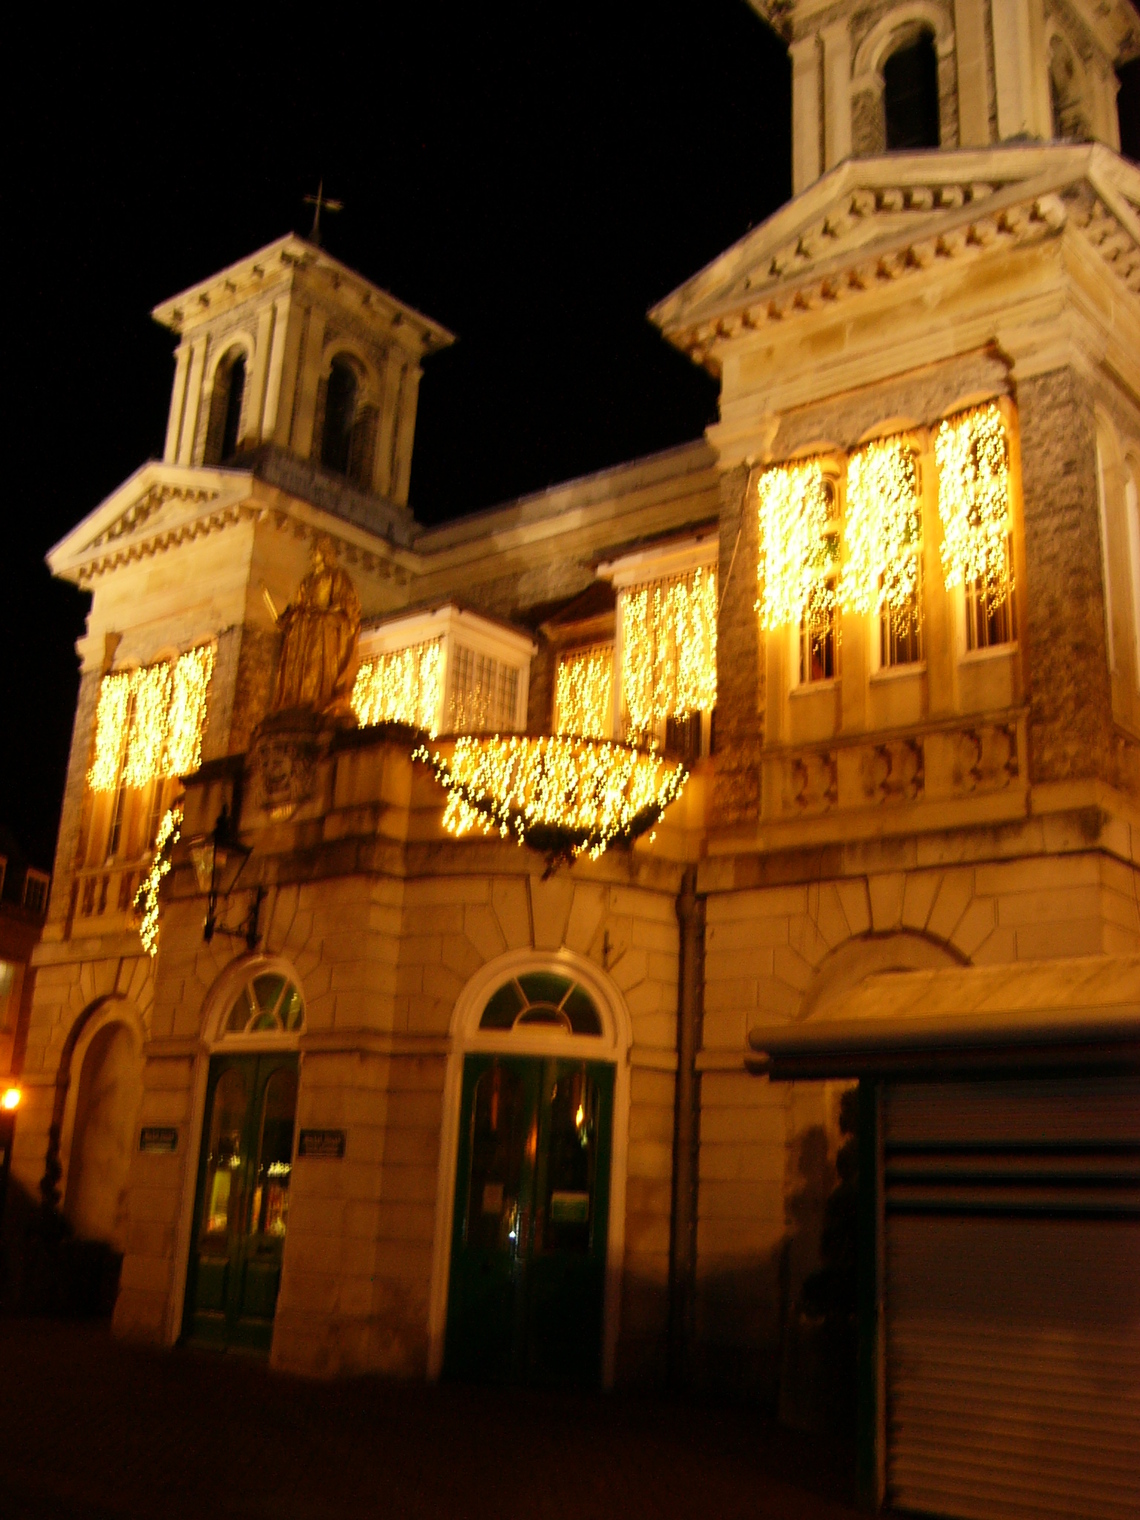 Market House at night